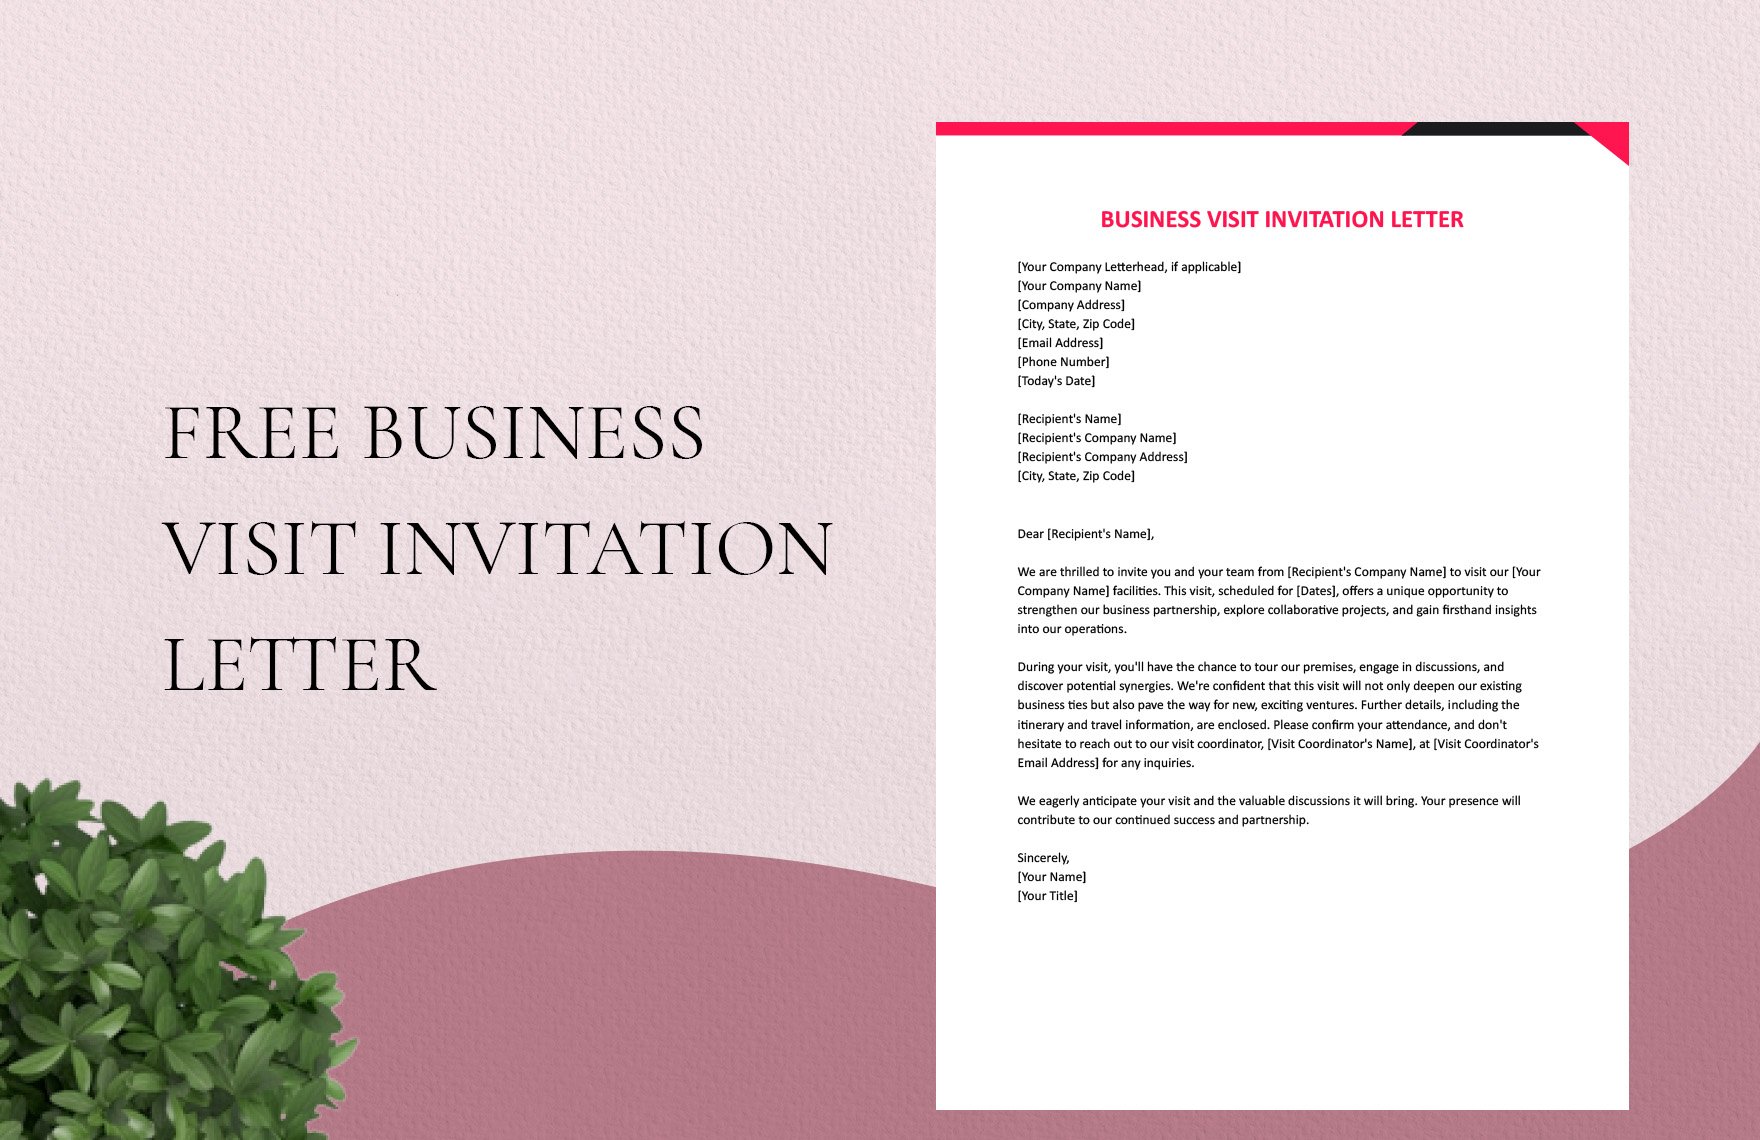 Free Business Visit Invitation Letter